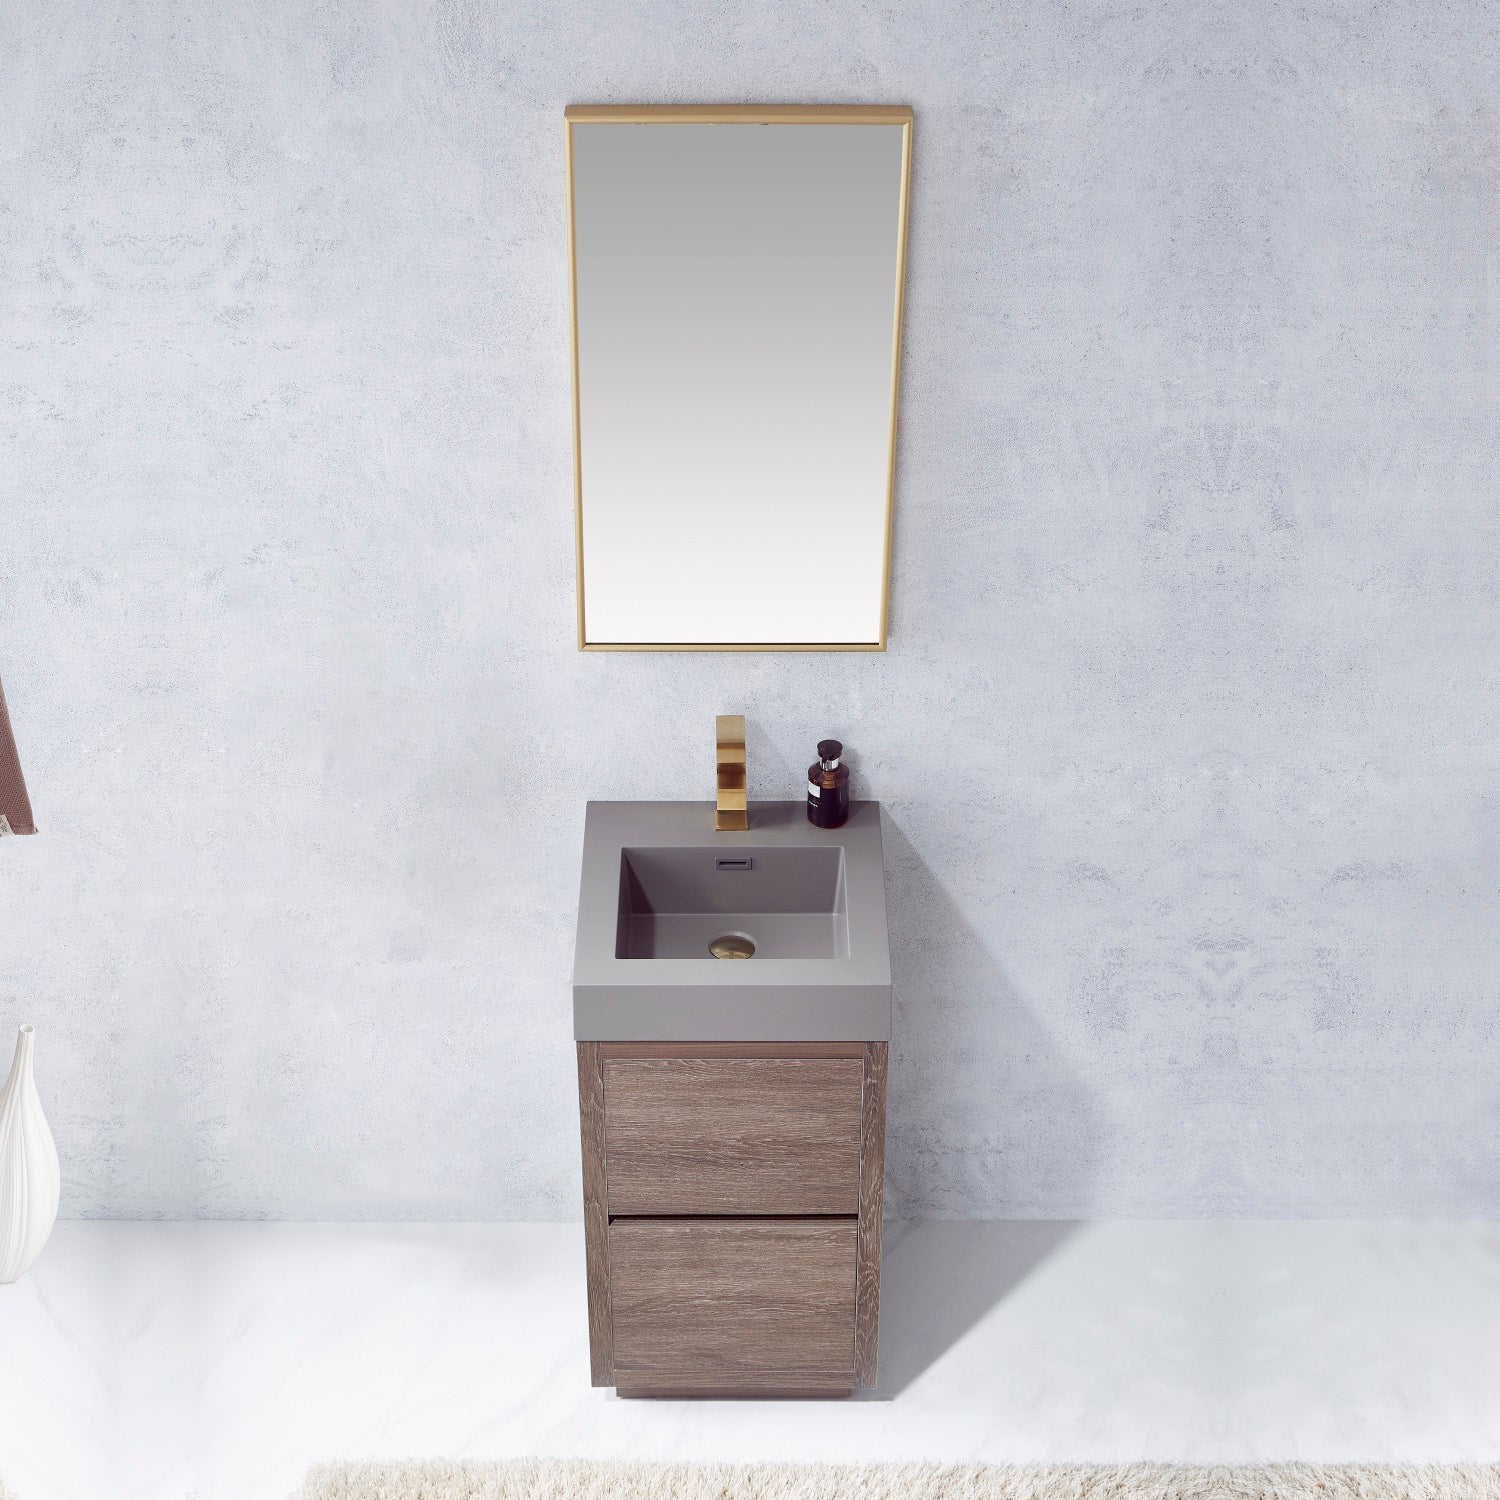 Vinnova Design Huesca 18" Single Sink Bath Vanity in North Carolina Oak with Grey Composite Integral Square Sink Top - New Star Living